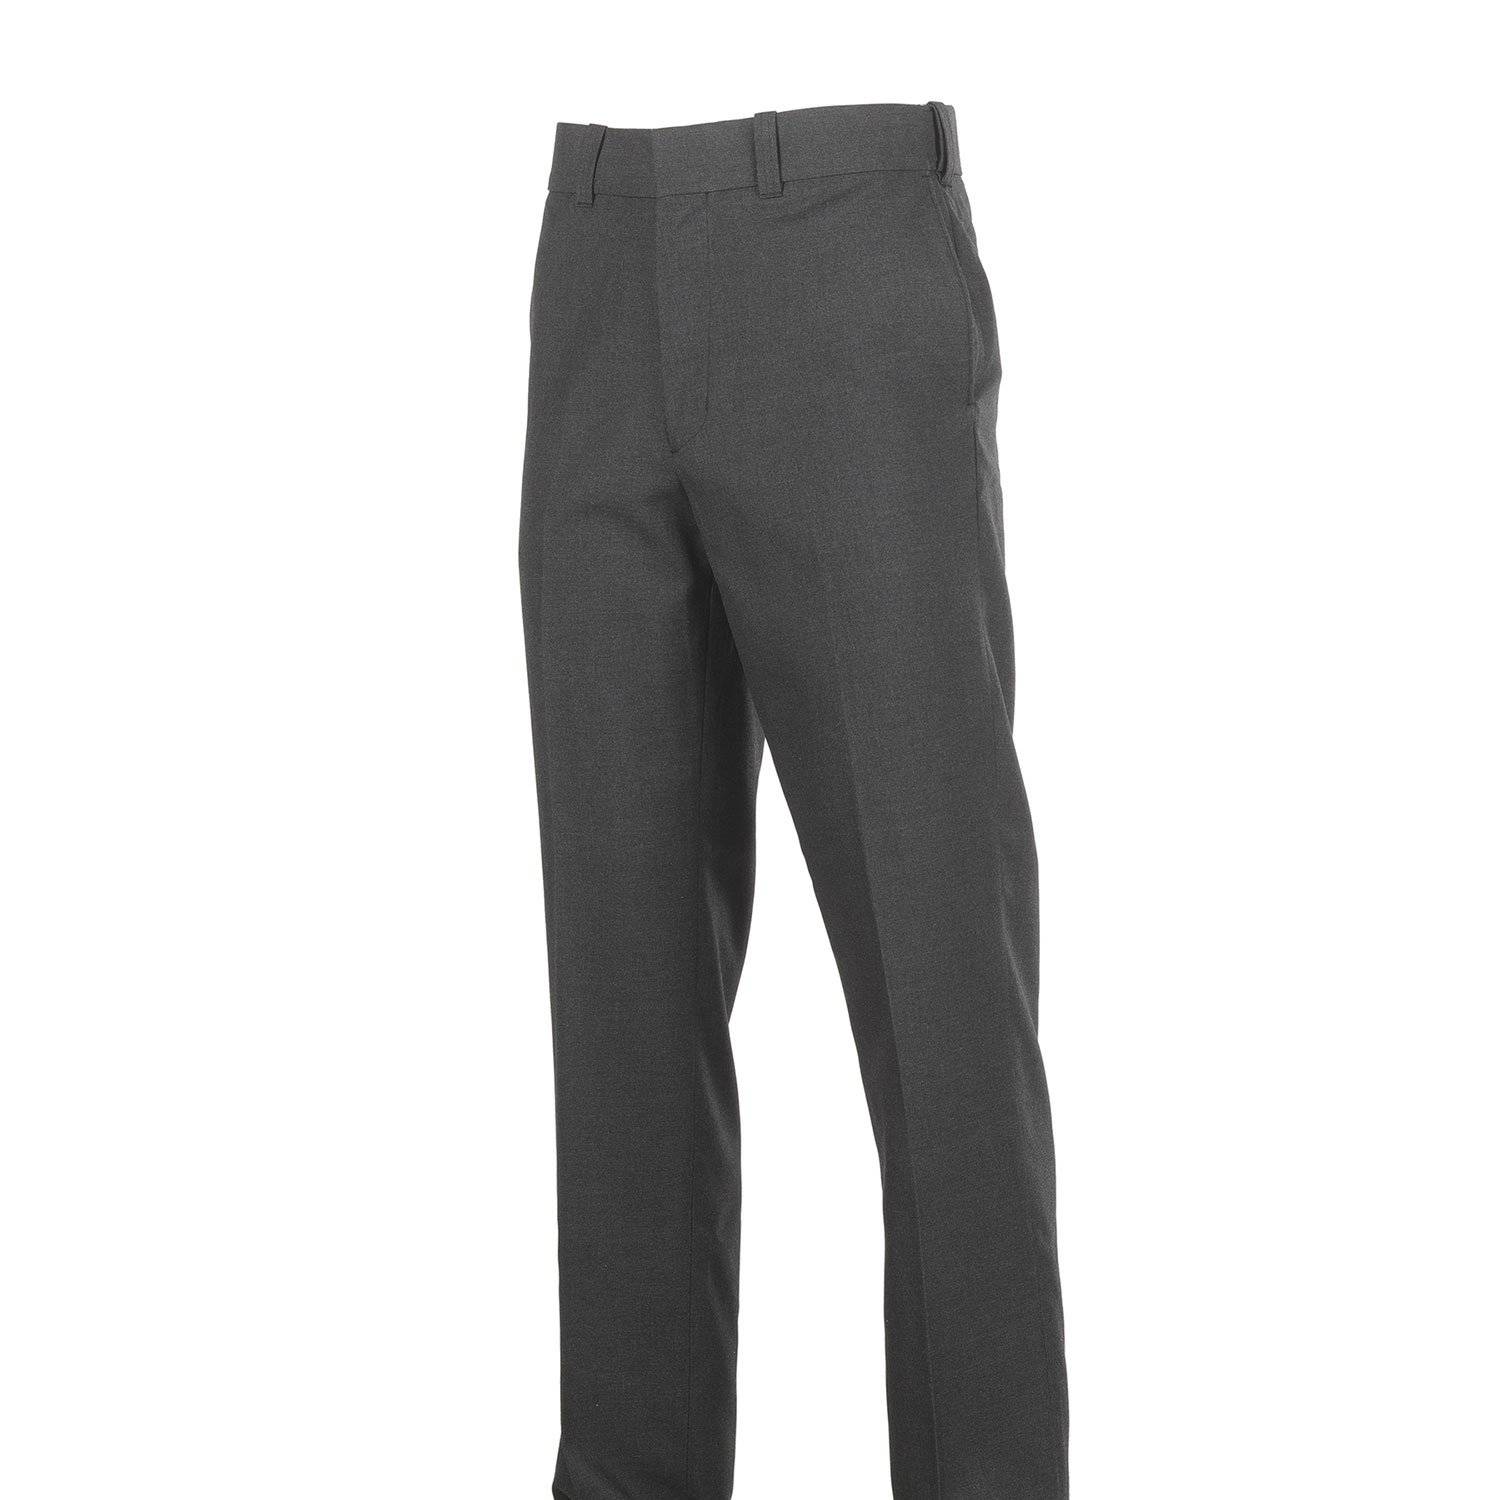 Galls FBOP Men's Dress Trousers- Plain Front & Class A